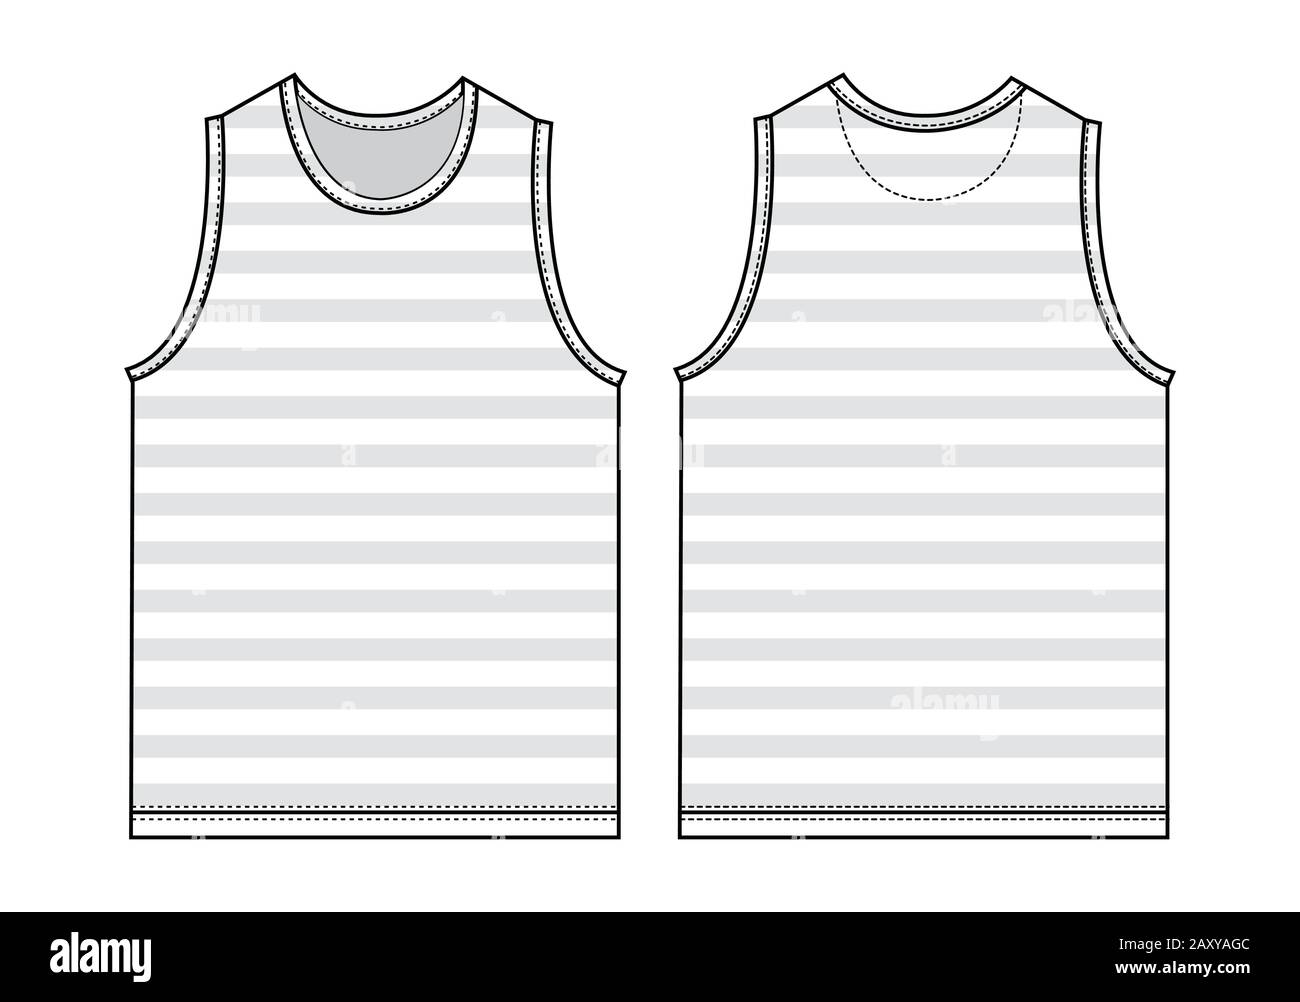 Tank top, sleeveless shirt template illustration Vector Image & - Alamy